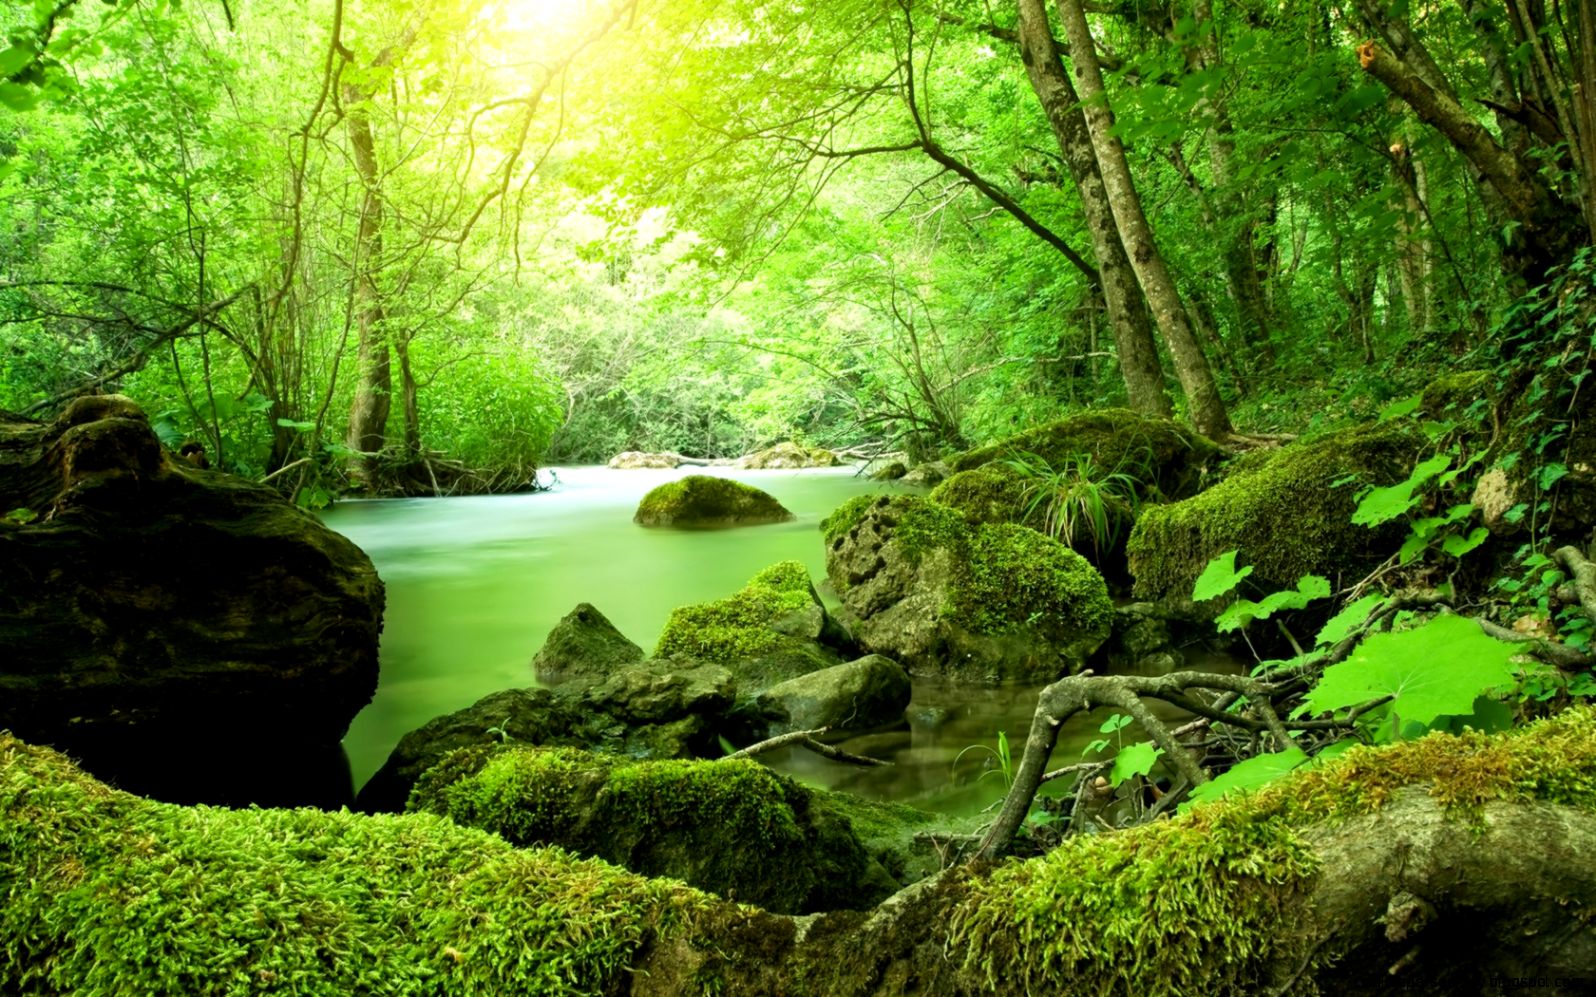 Green Jungle Background